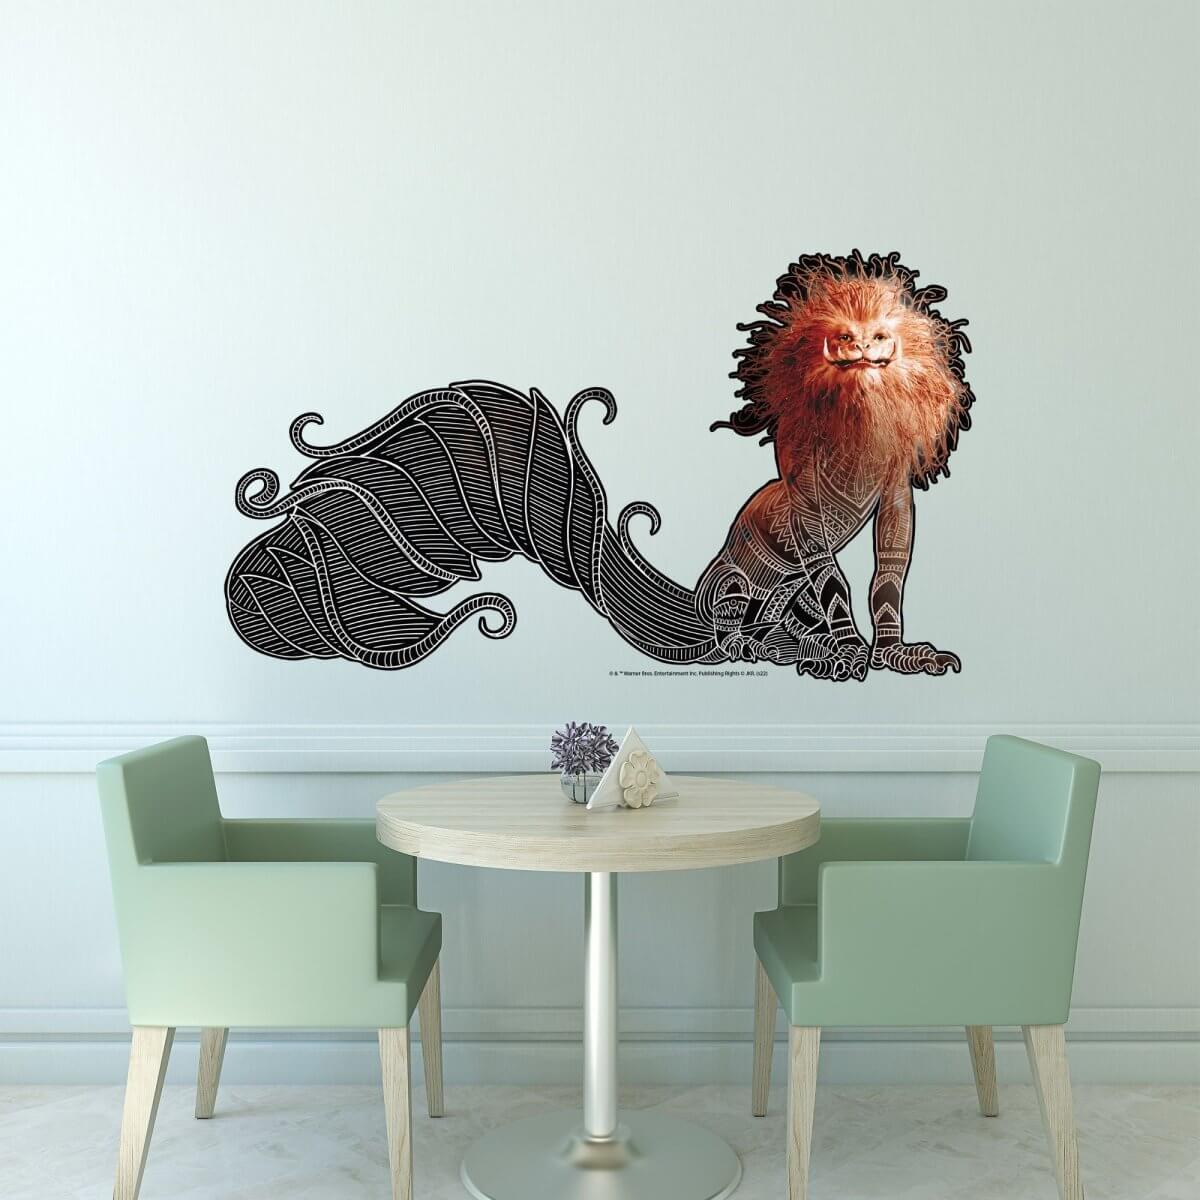 Kismet Decals Fantastic Beasts Zouwu Art Licensed Wall Sticker - Easy DIY Home & Kids Room Decor Wall Decal Art - Kismet Decals